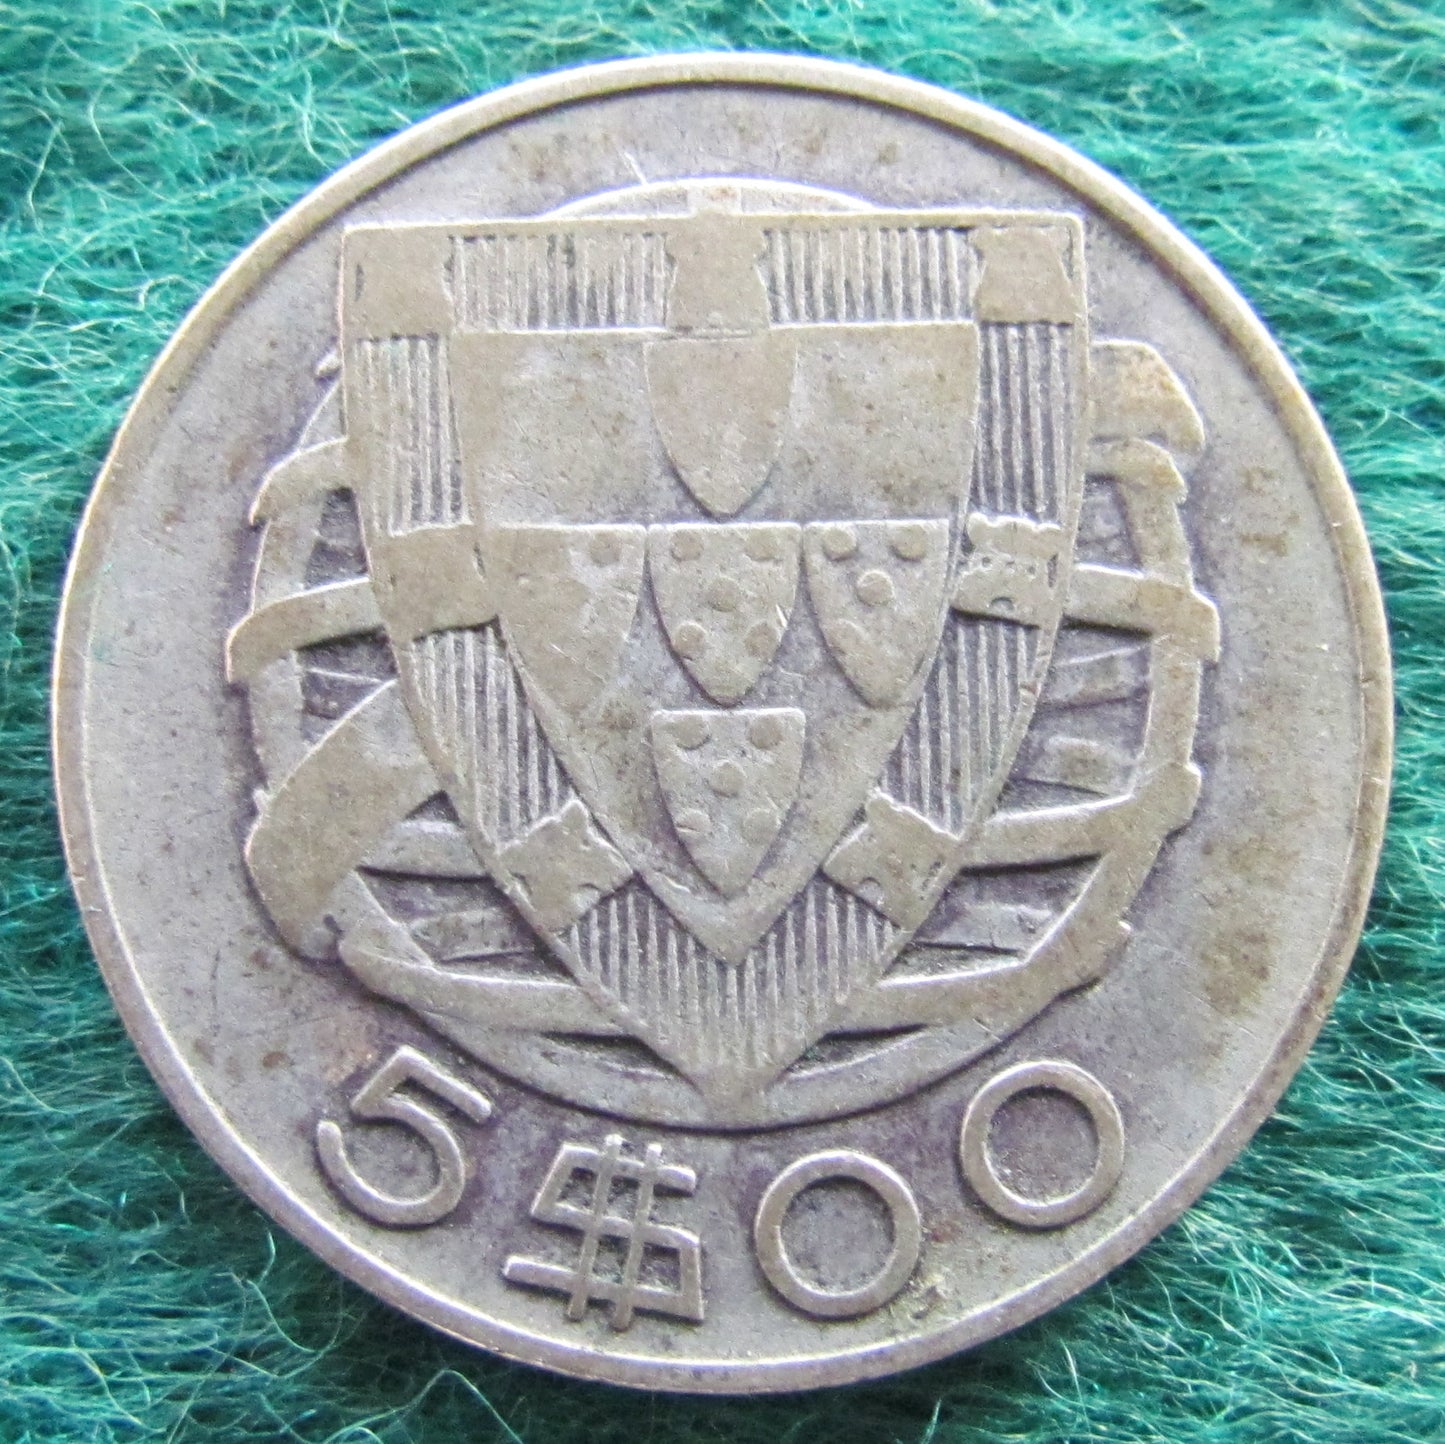 Portugal 1942 5 Escudo Coin - Circulated